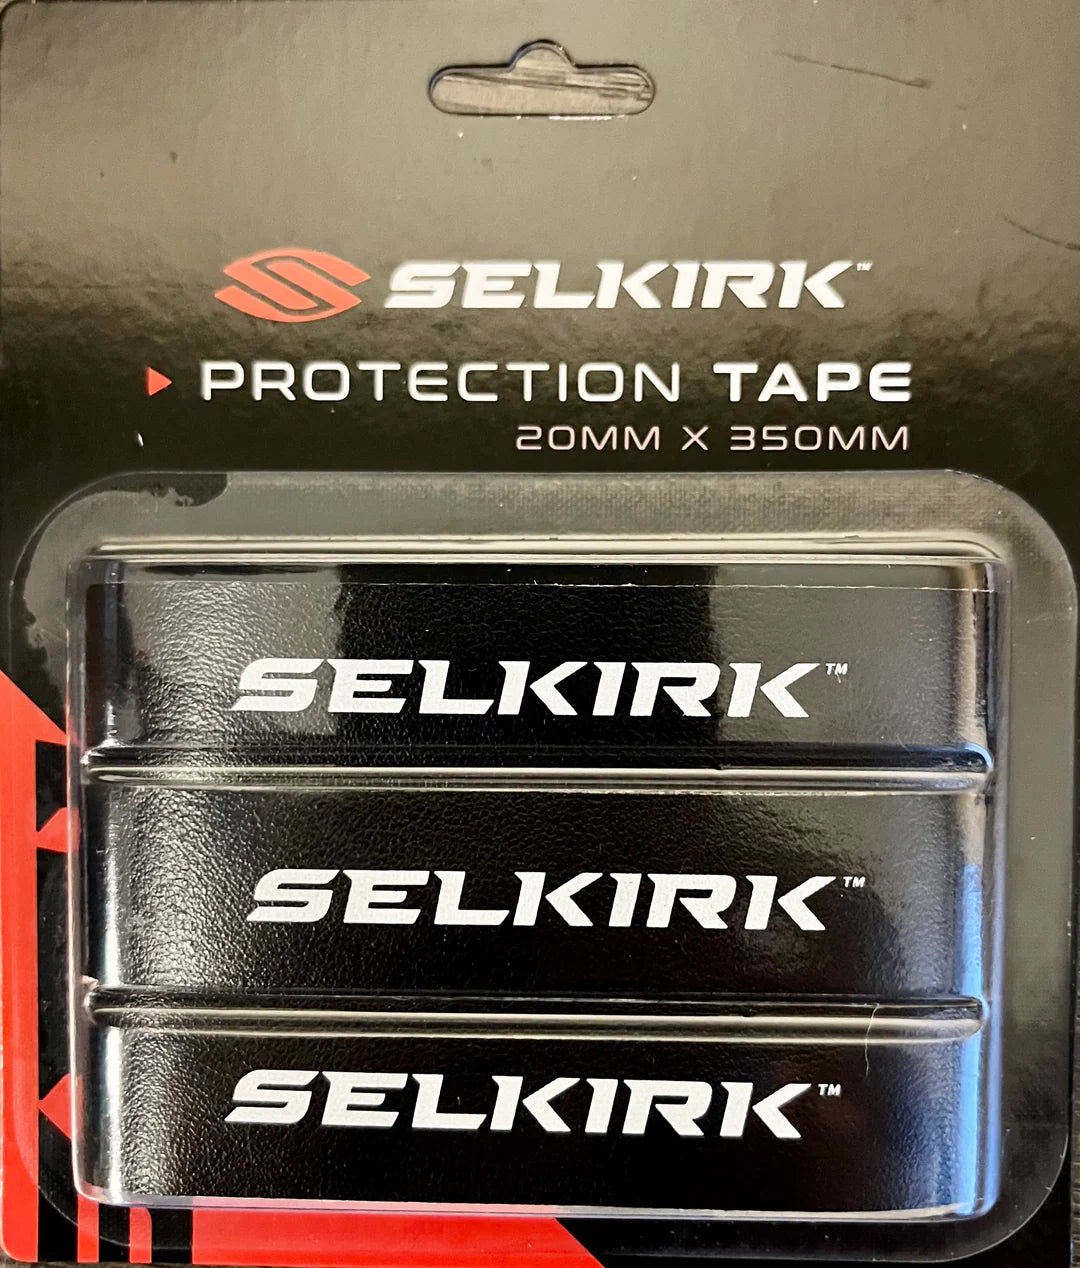 Selkirk-protective edge guard tape